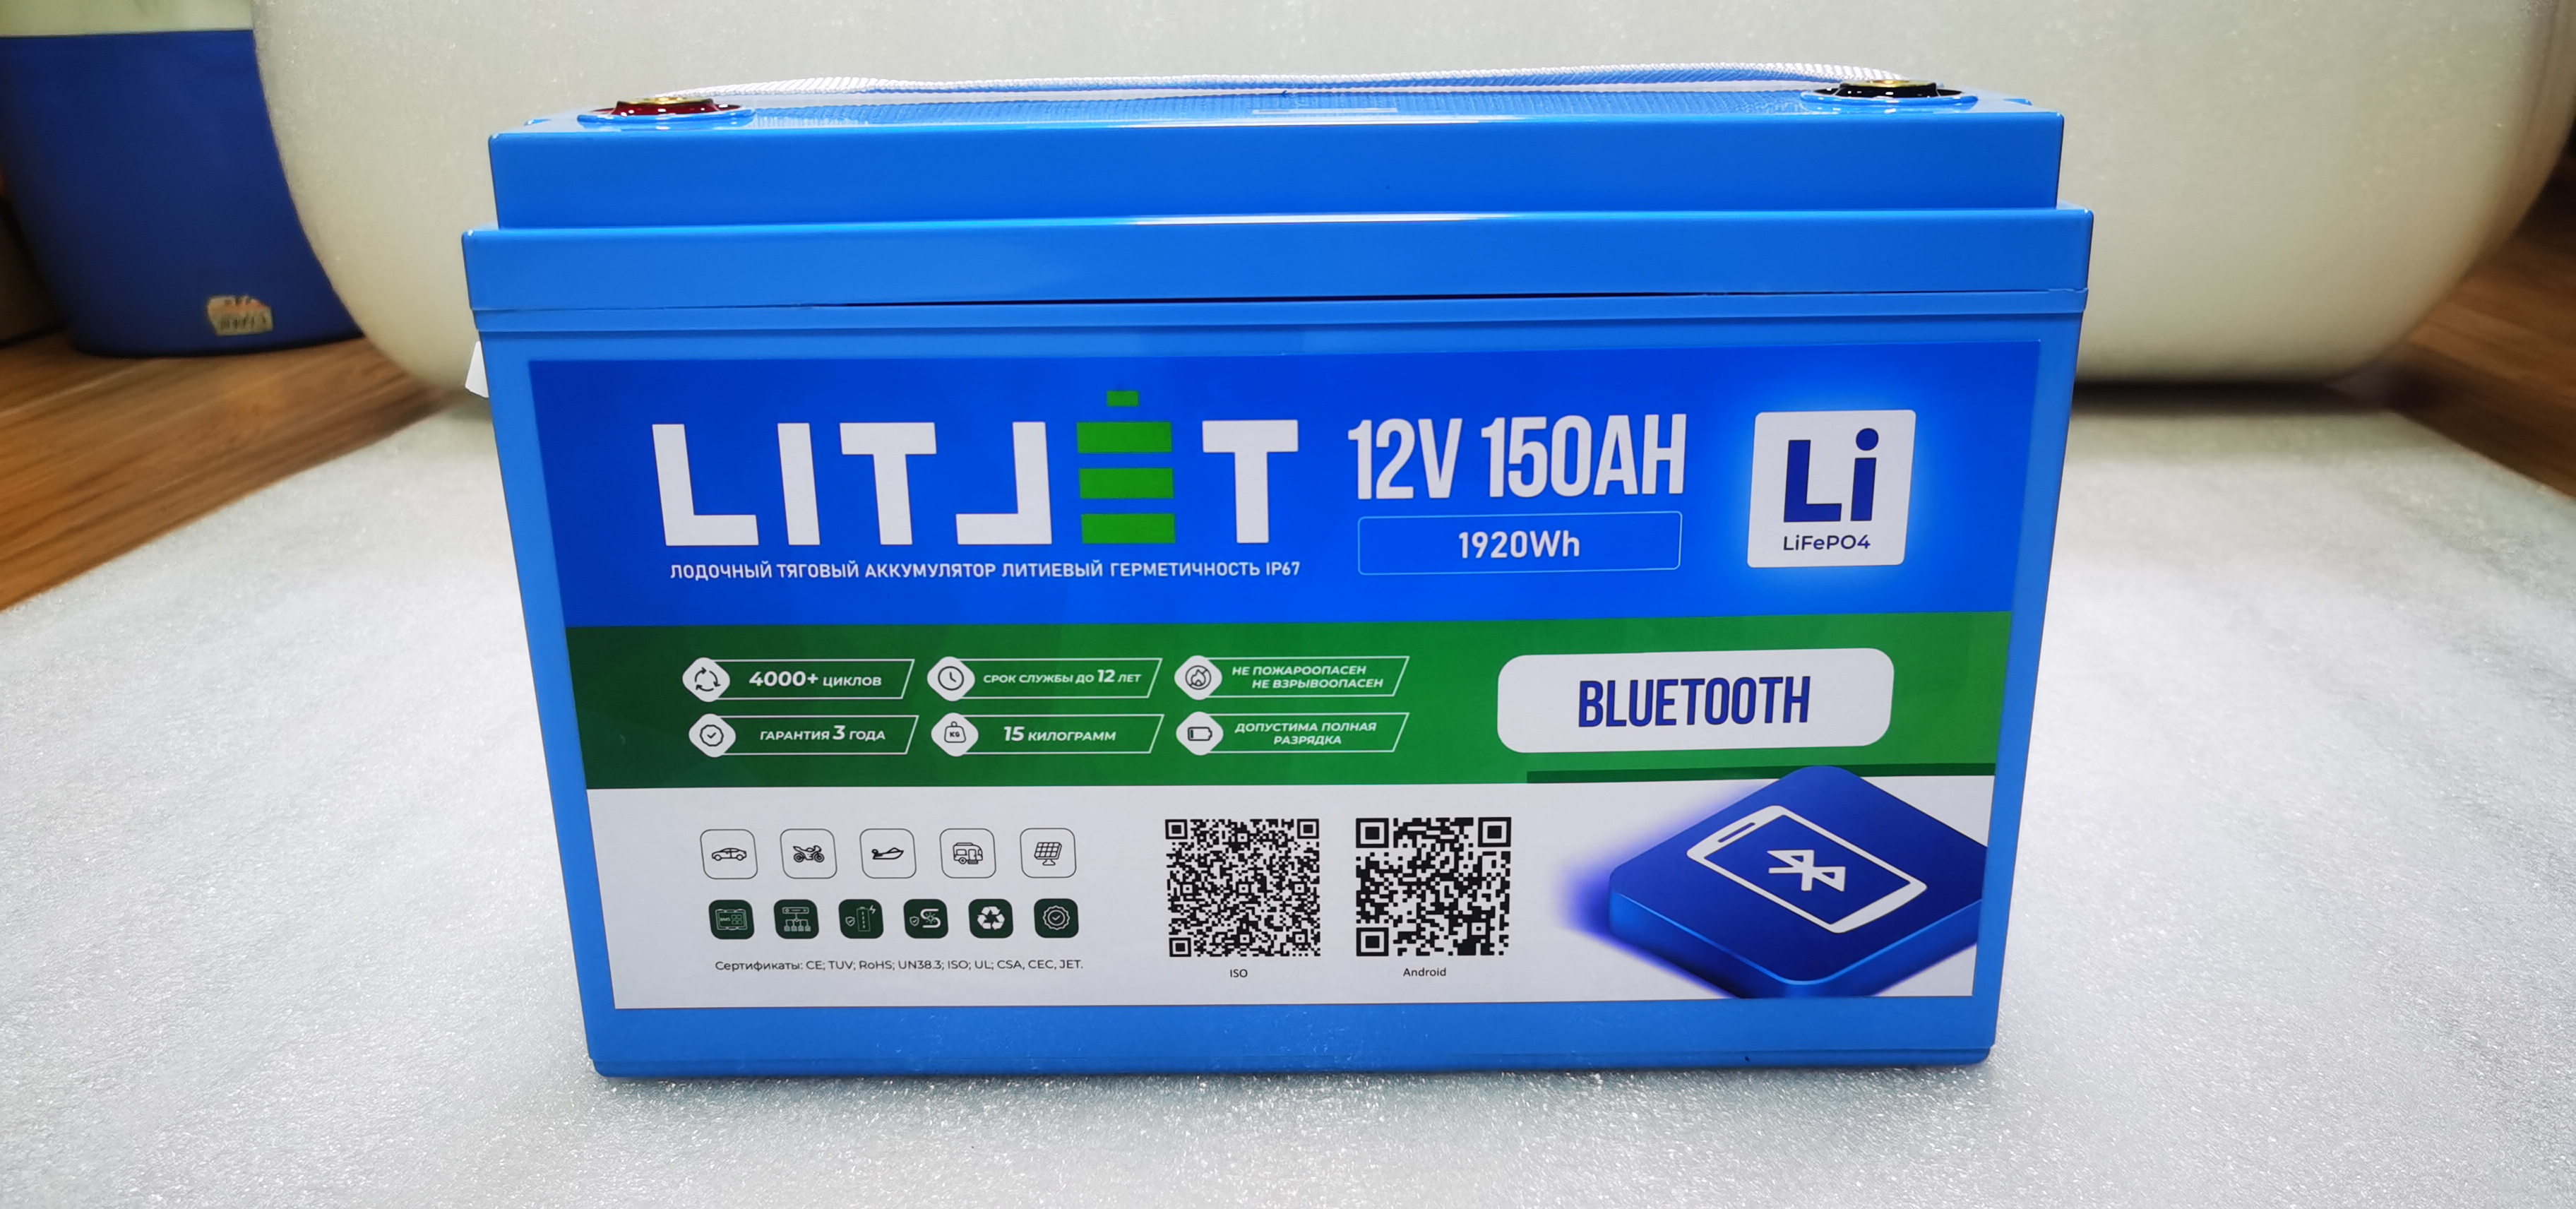 LITJET PRO Тяговый аккумулятор глубокого цикла 12V 150Ah 1920Wh IP67